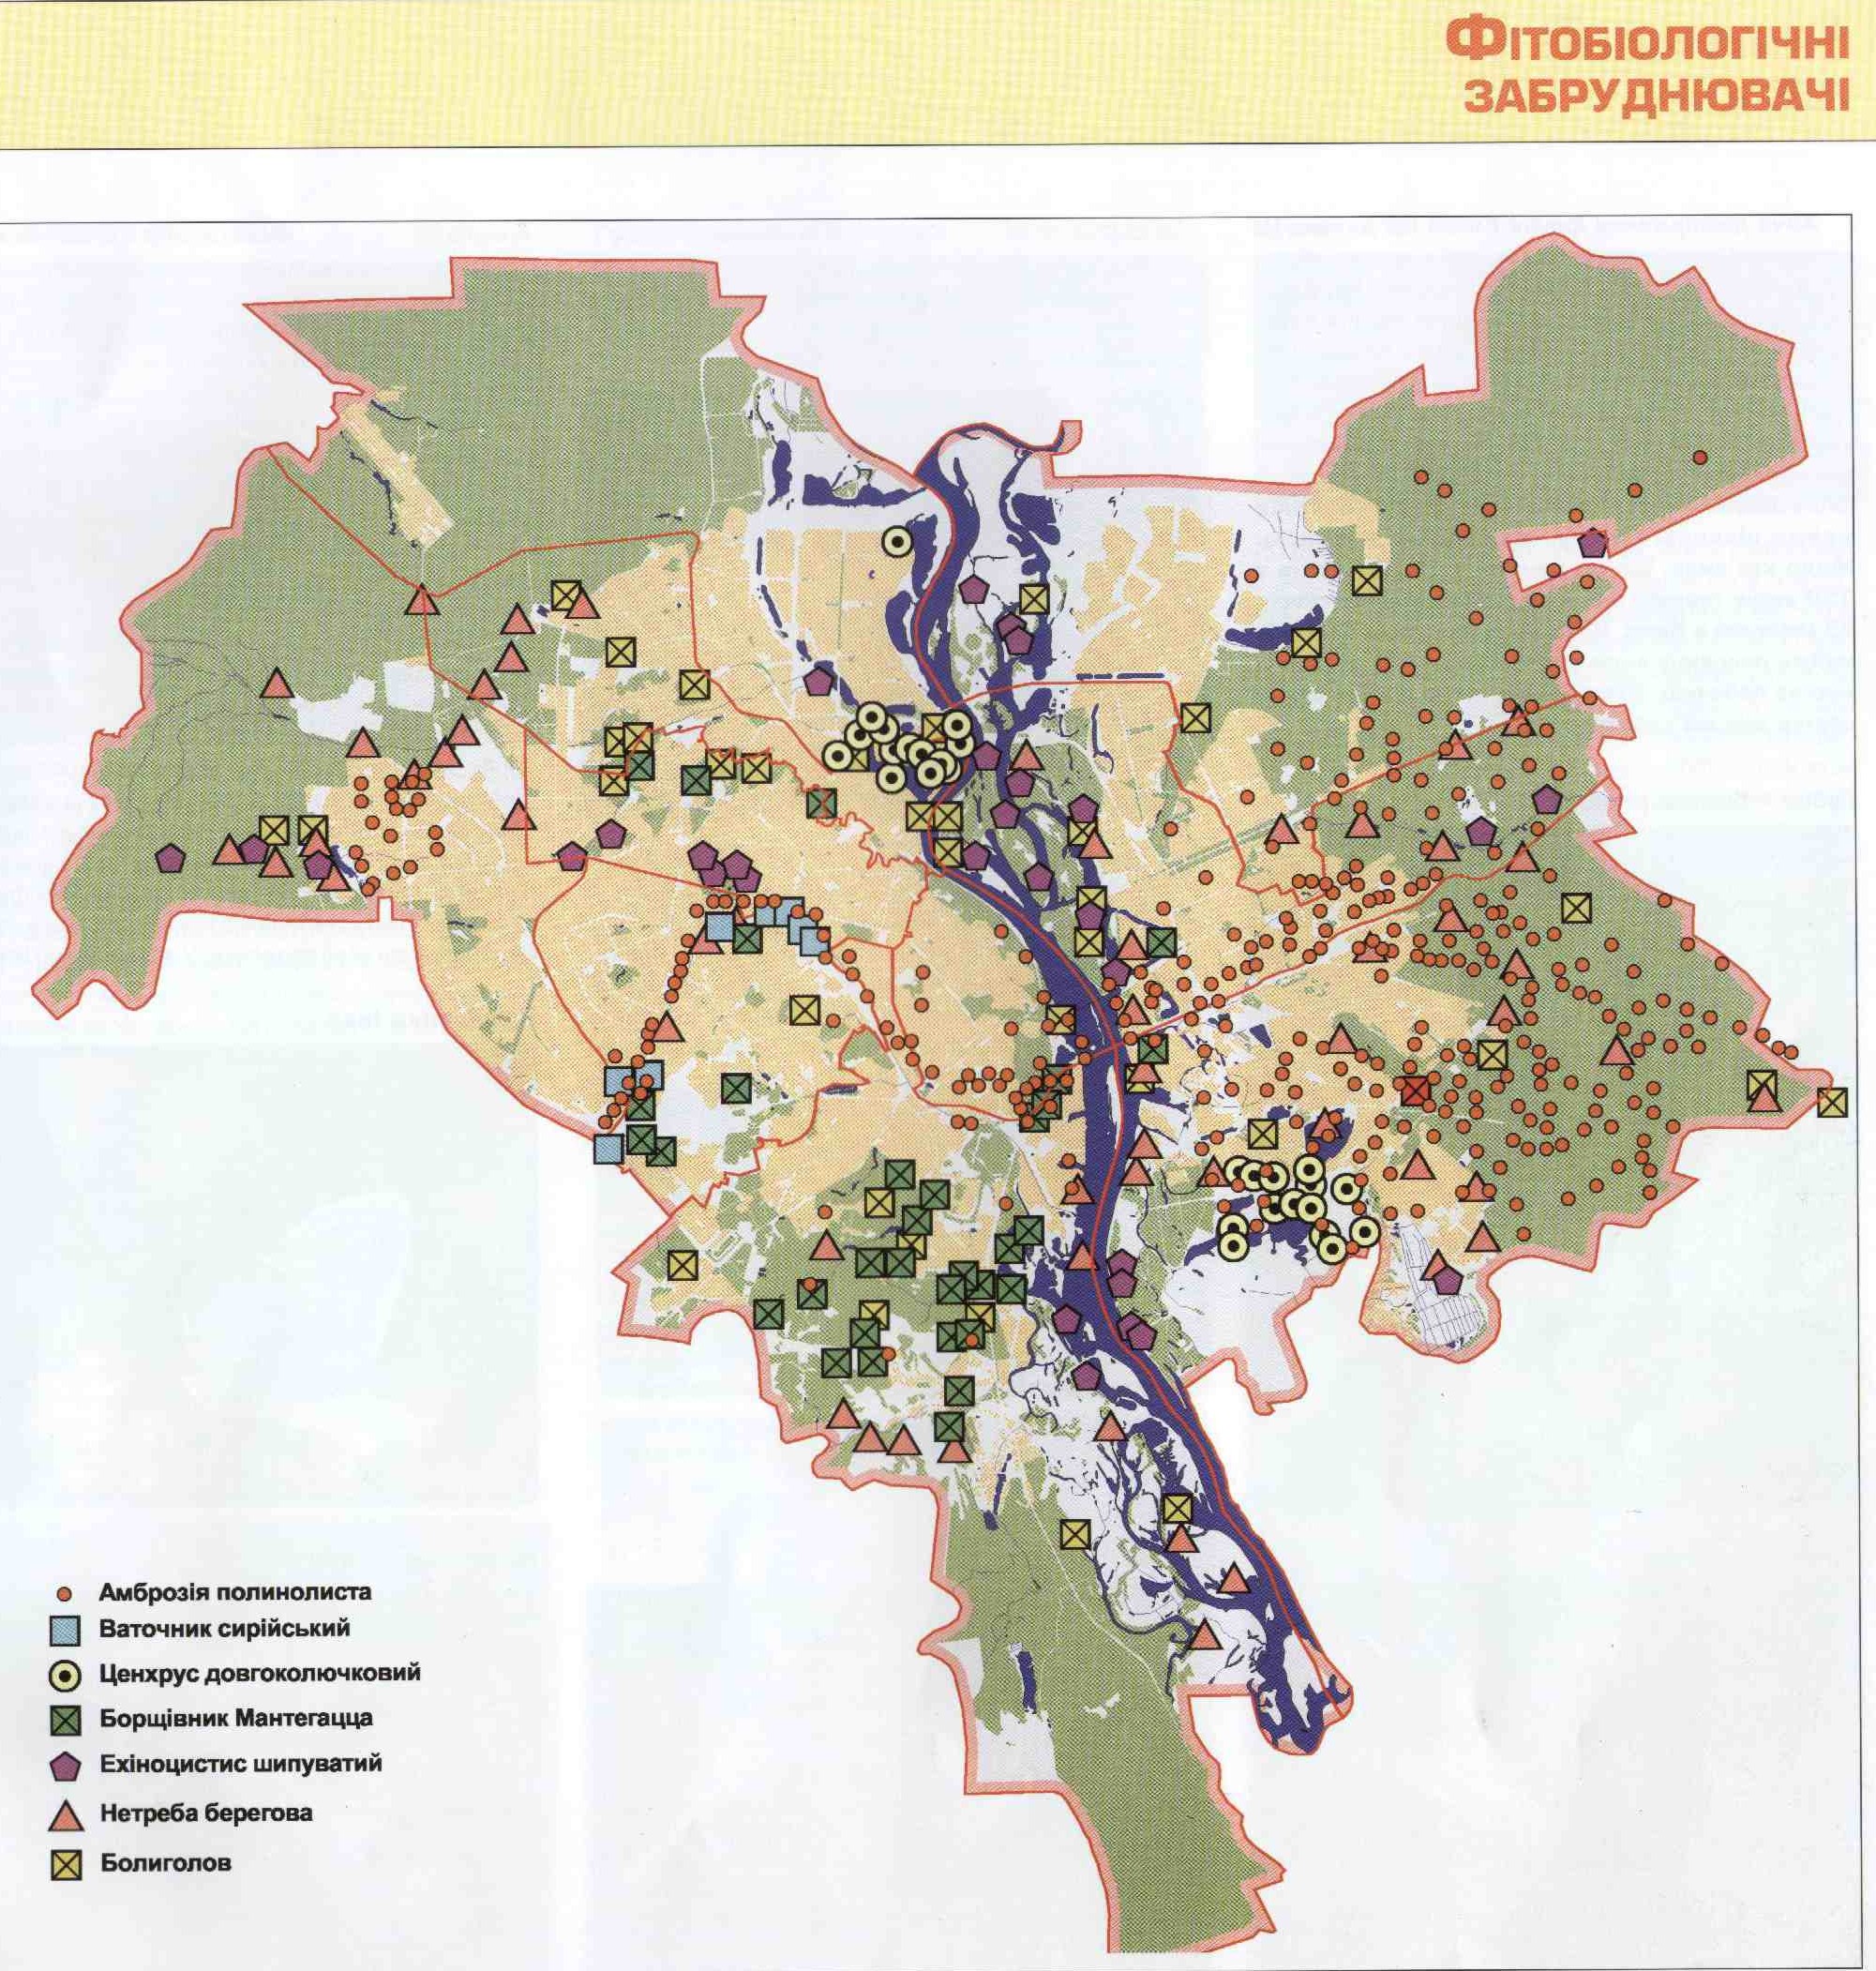 Карта фито-биологического загрязнения Киева